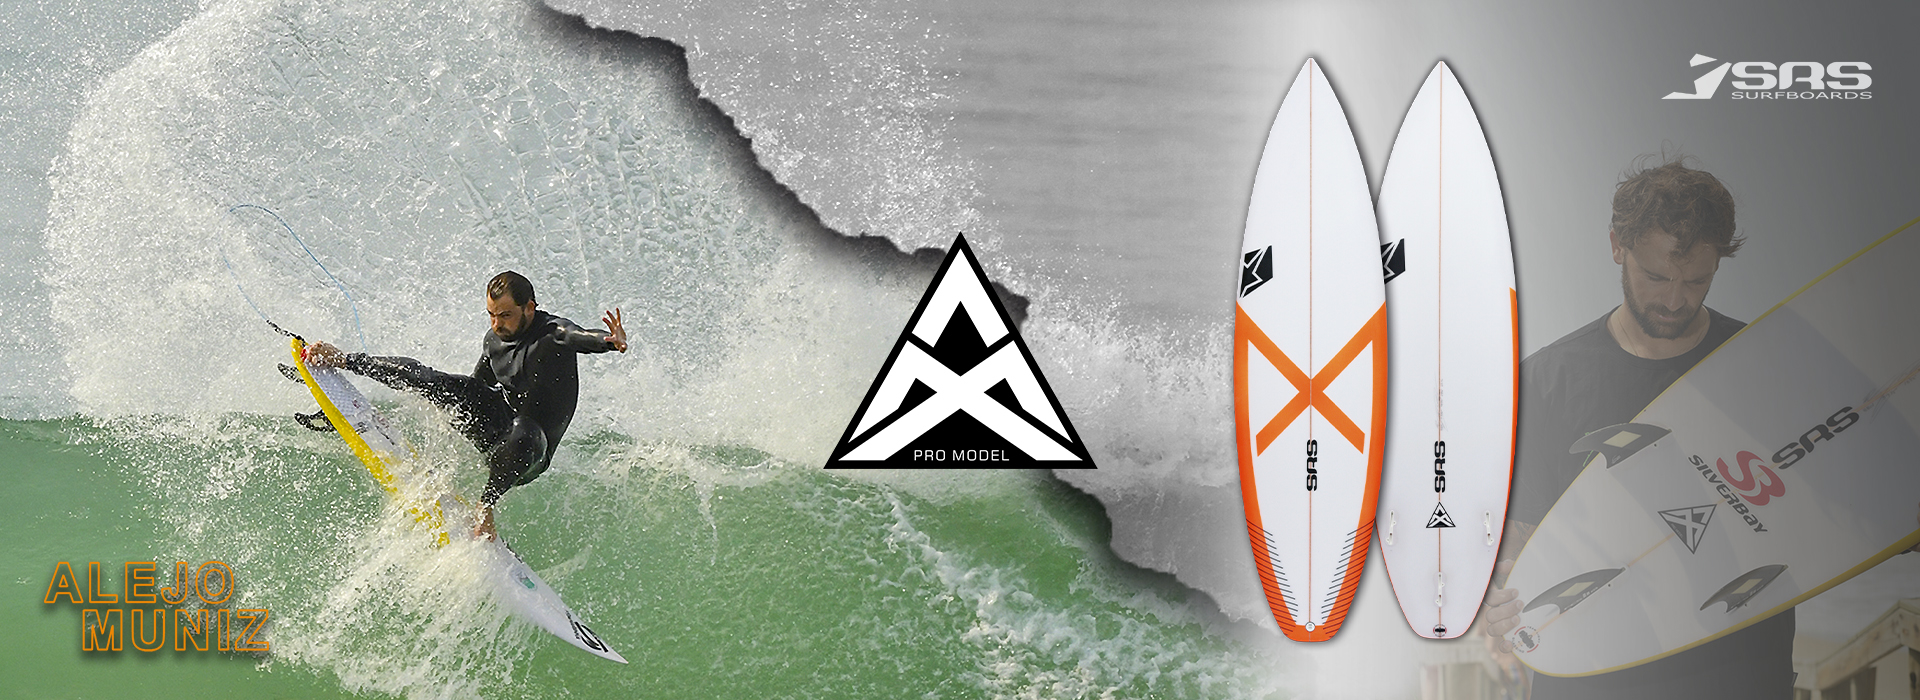 Alejo Muniz AMX High Performance Model - SRS Surfboards